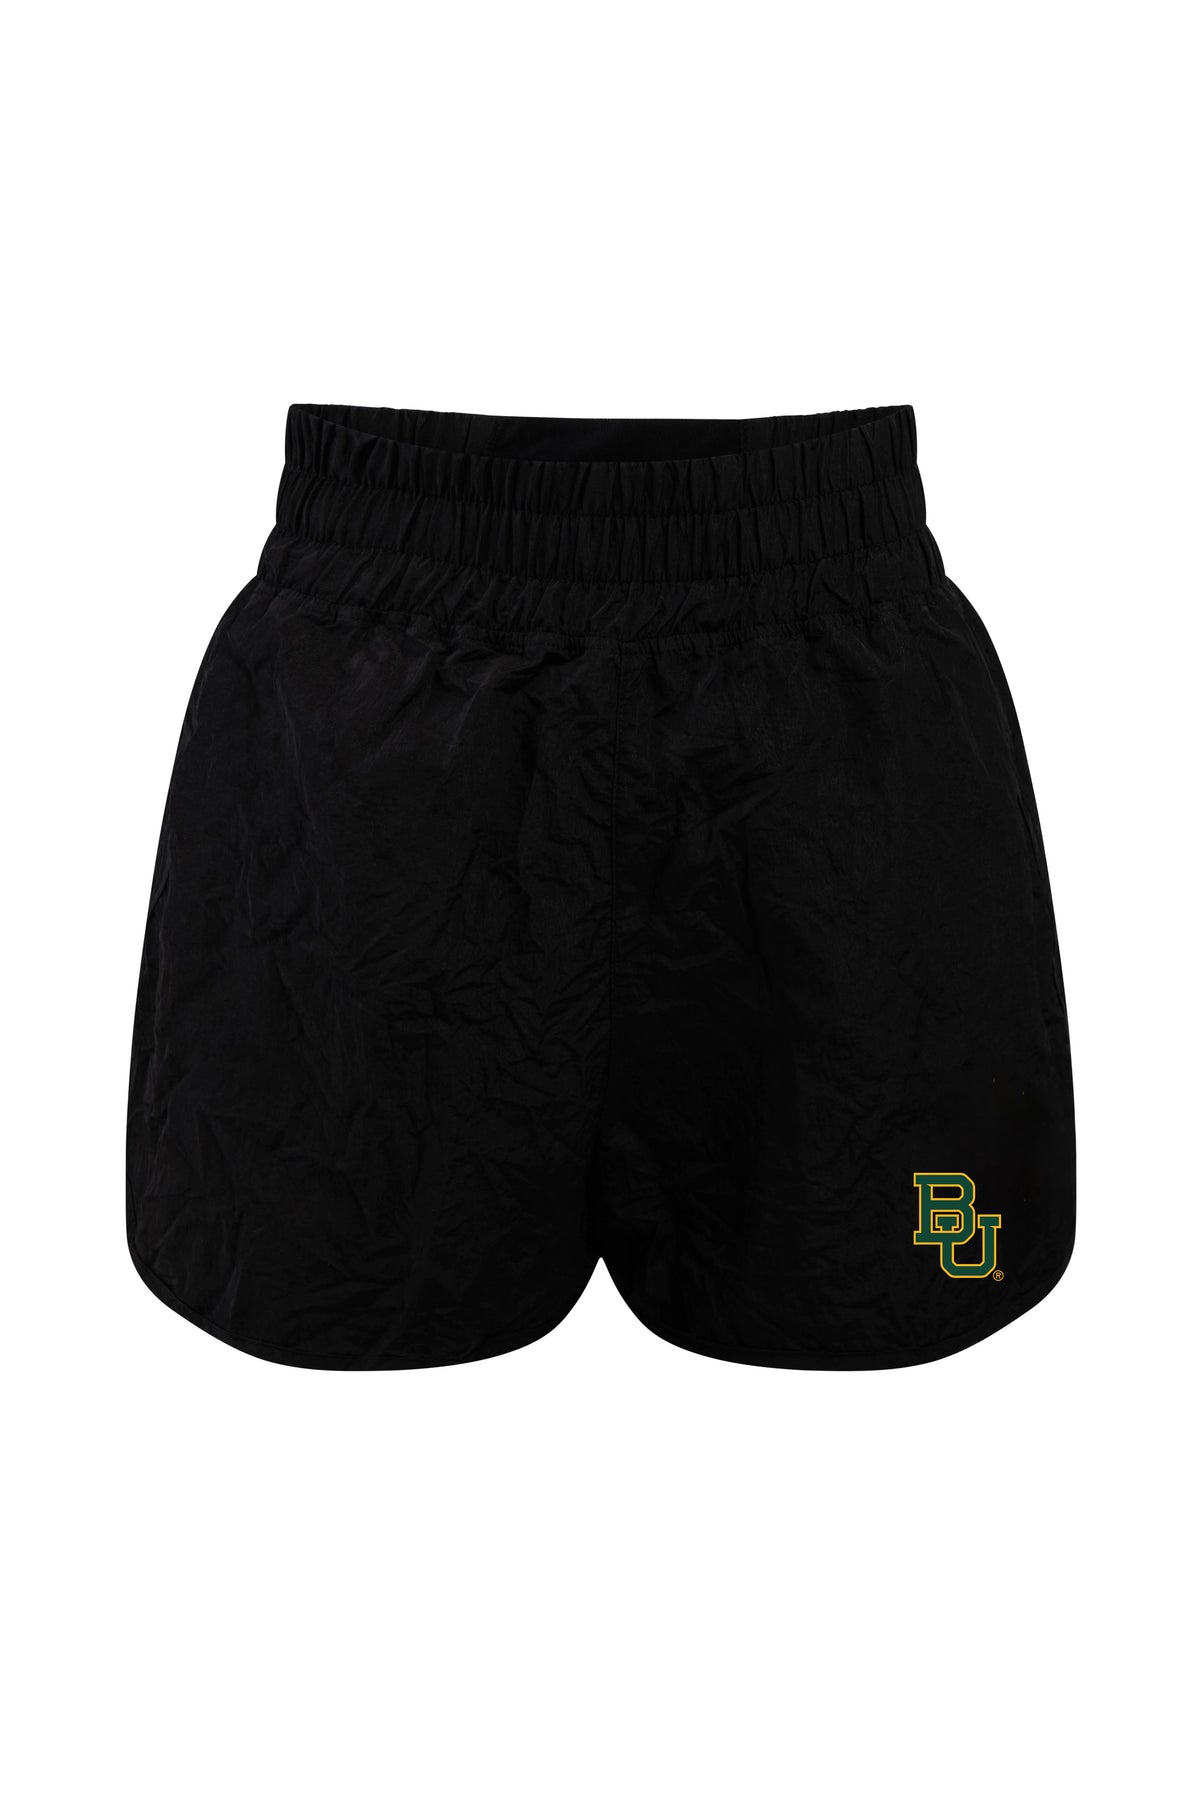 Baylor University Boxer Short